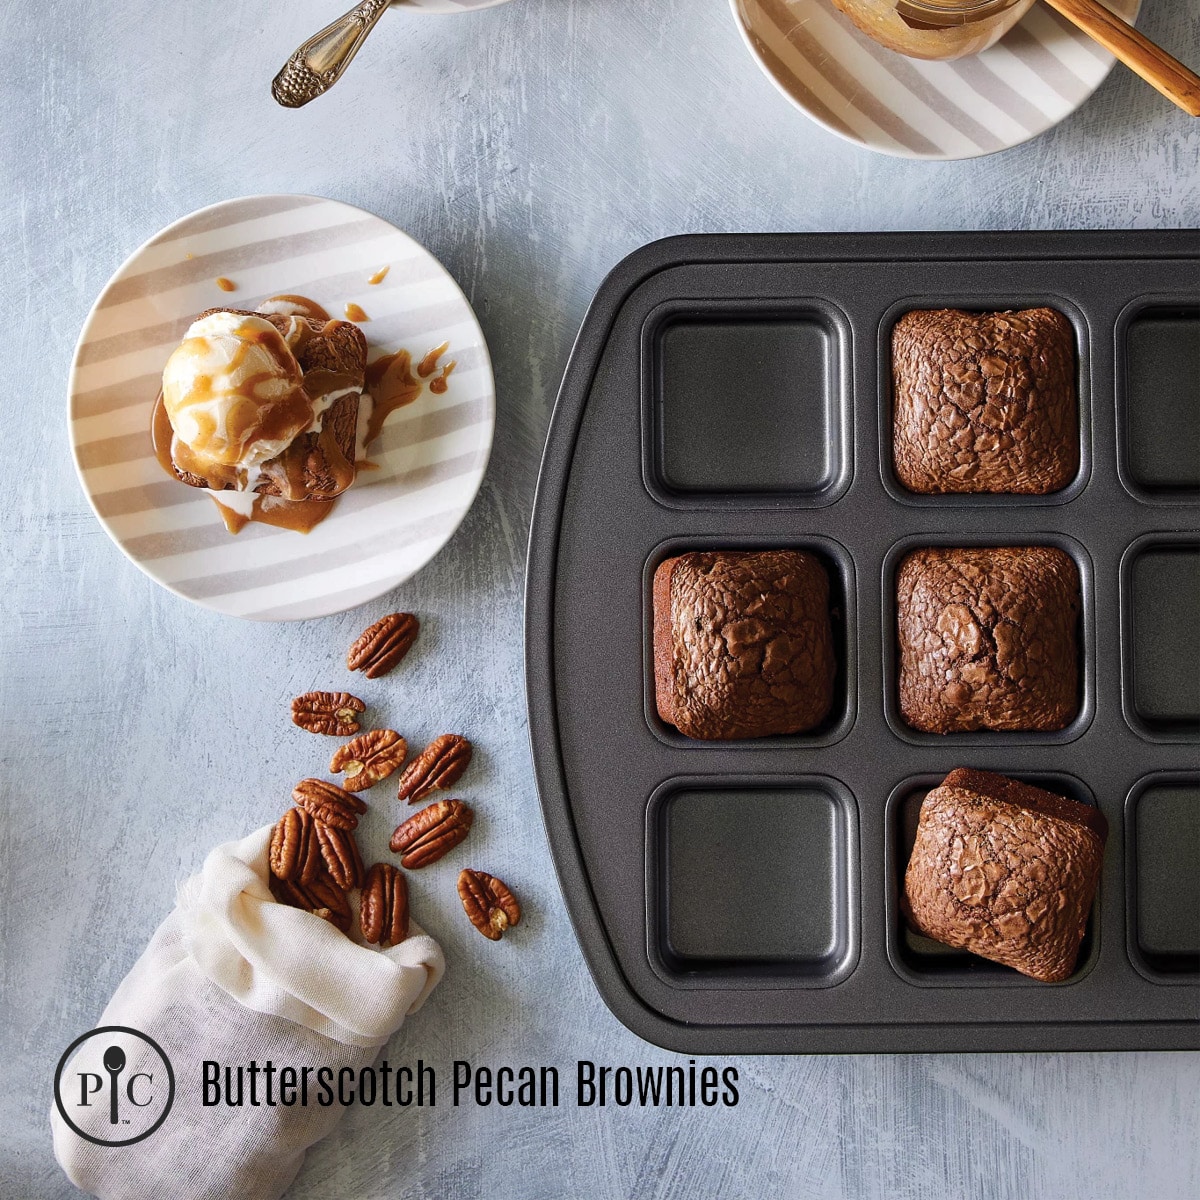 https://eadn-wc01-7182175.nxedge.io/wp-content/uploads/2022/08/post-recipe-butterscotch-pecan-brownies.jpg